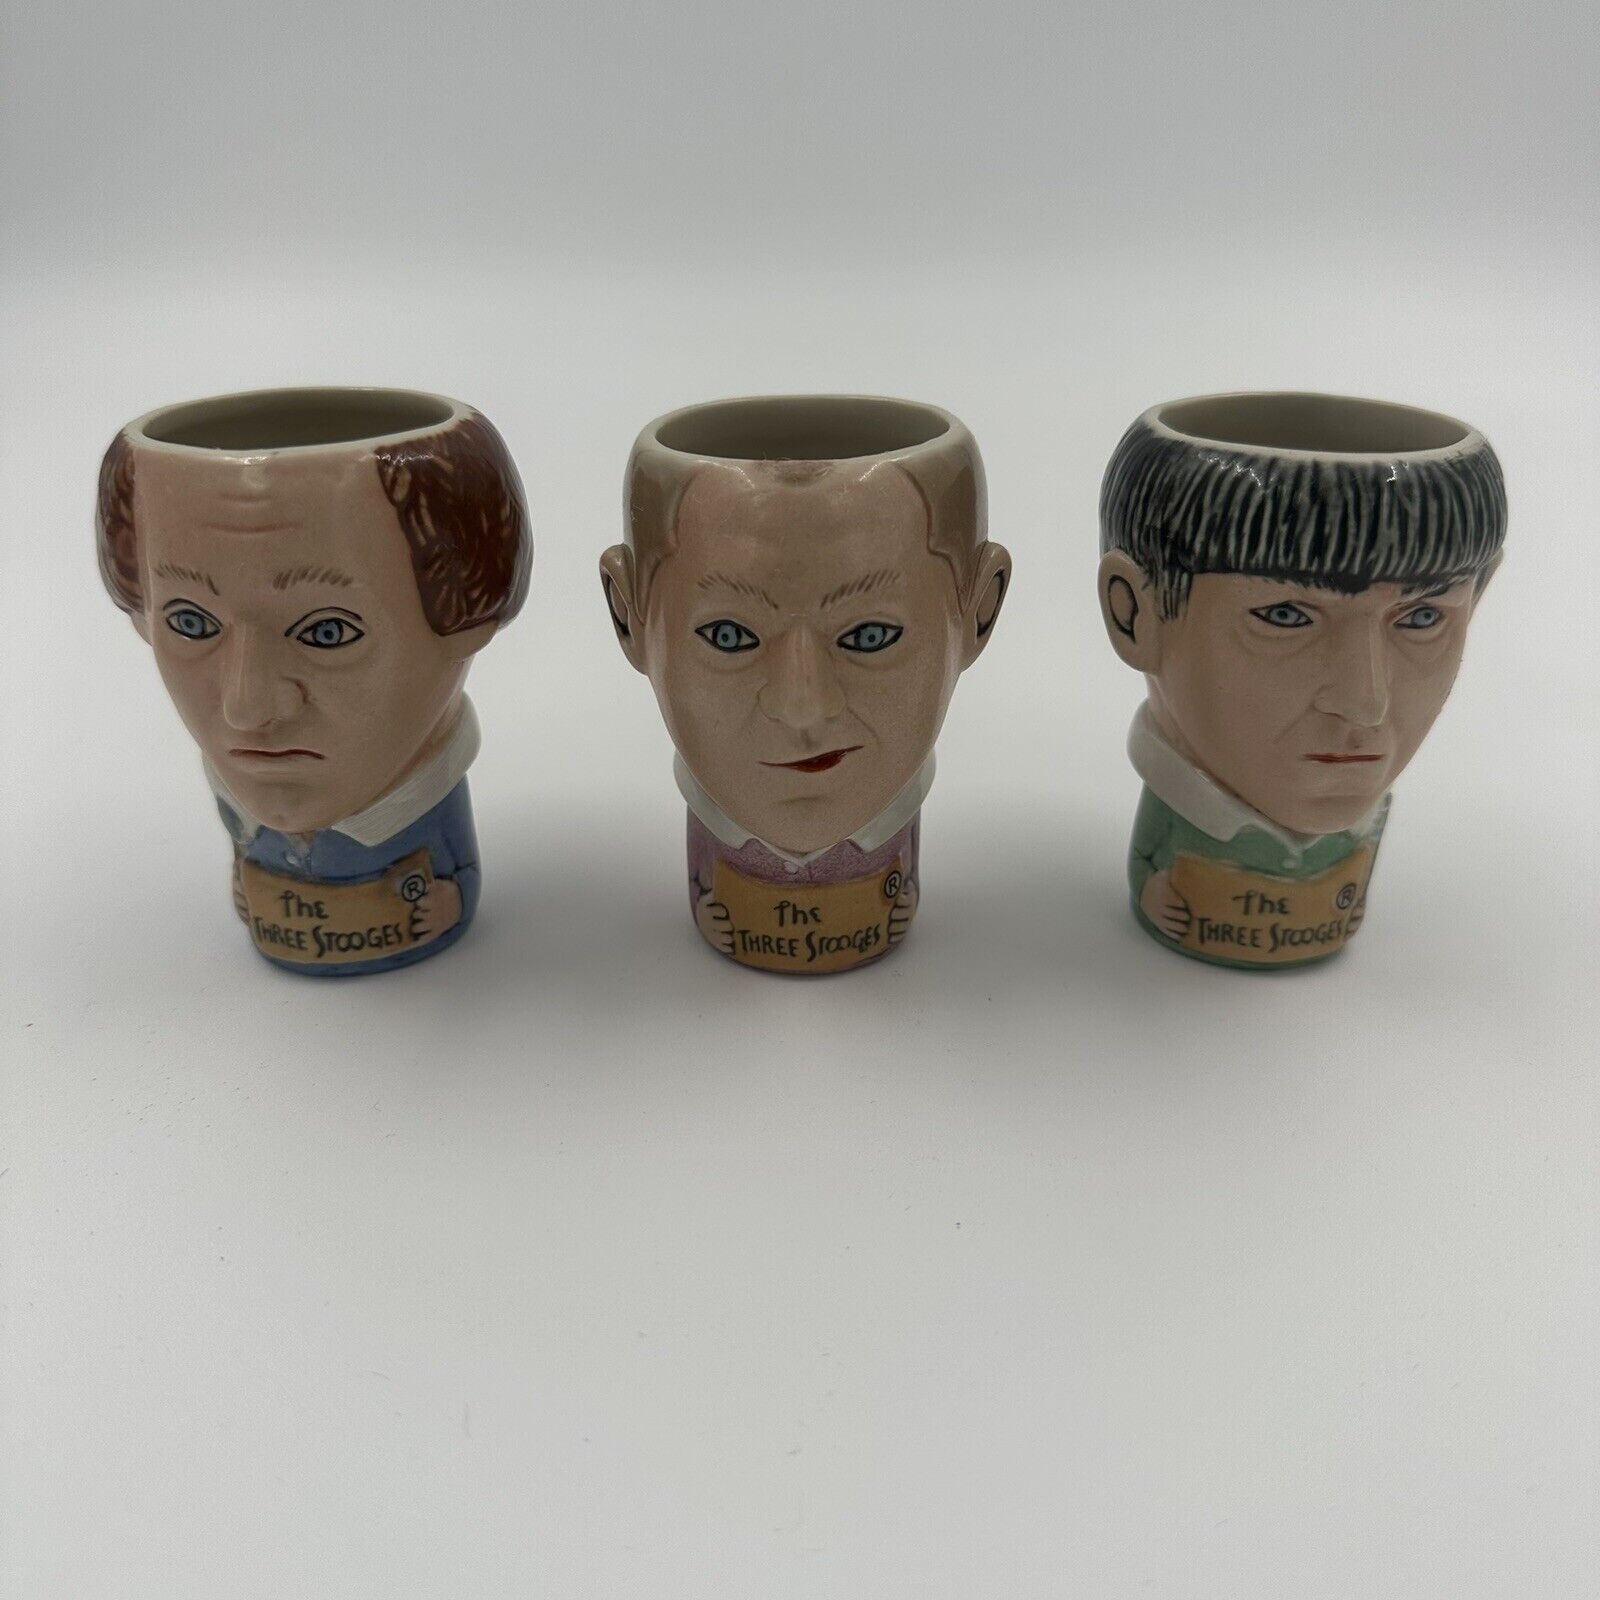 Vintage Three Stooges Ceramic Shot Glass Set - Larry, Curly & Moe - 2001